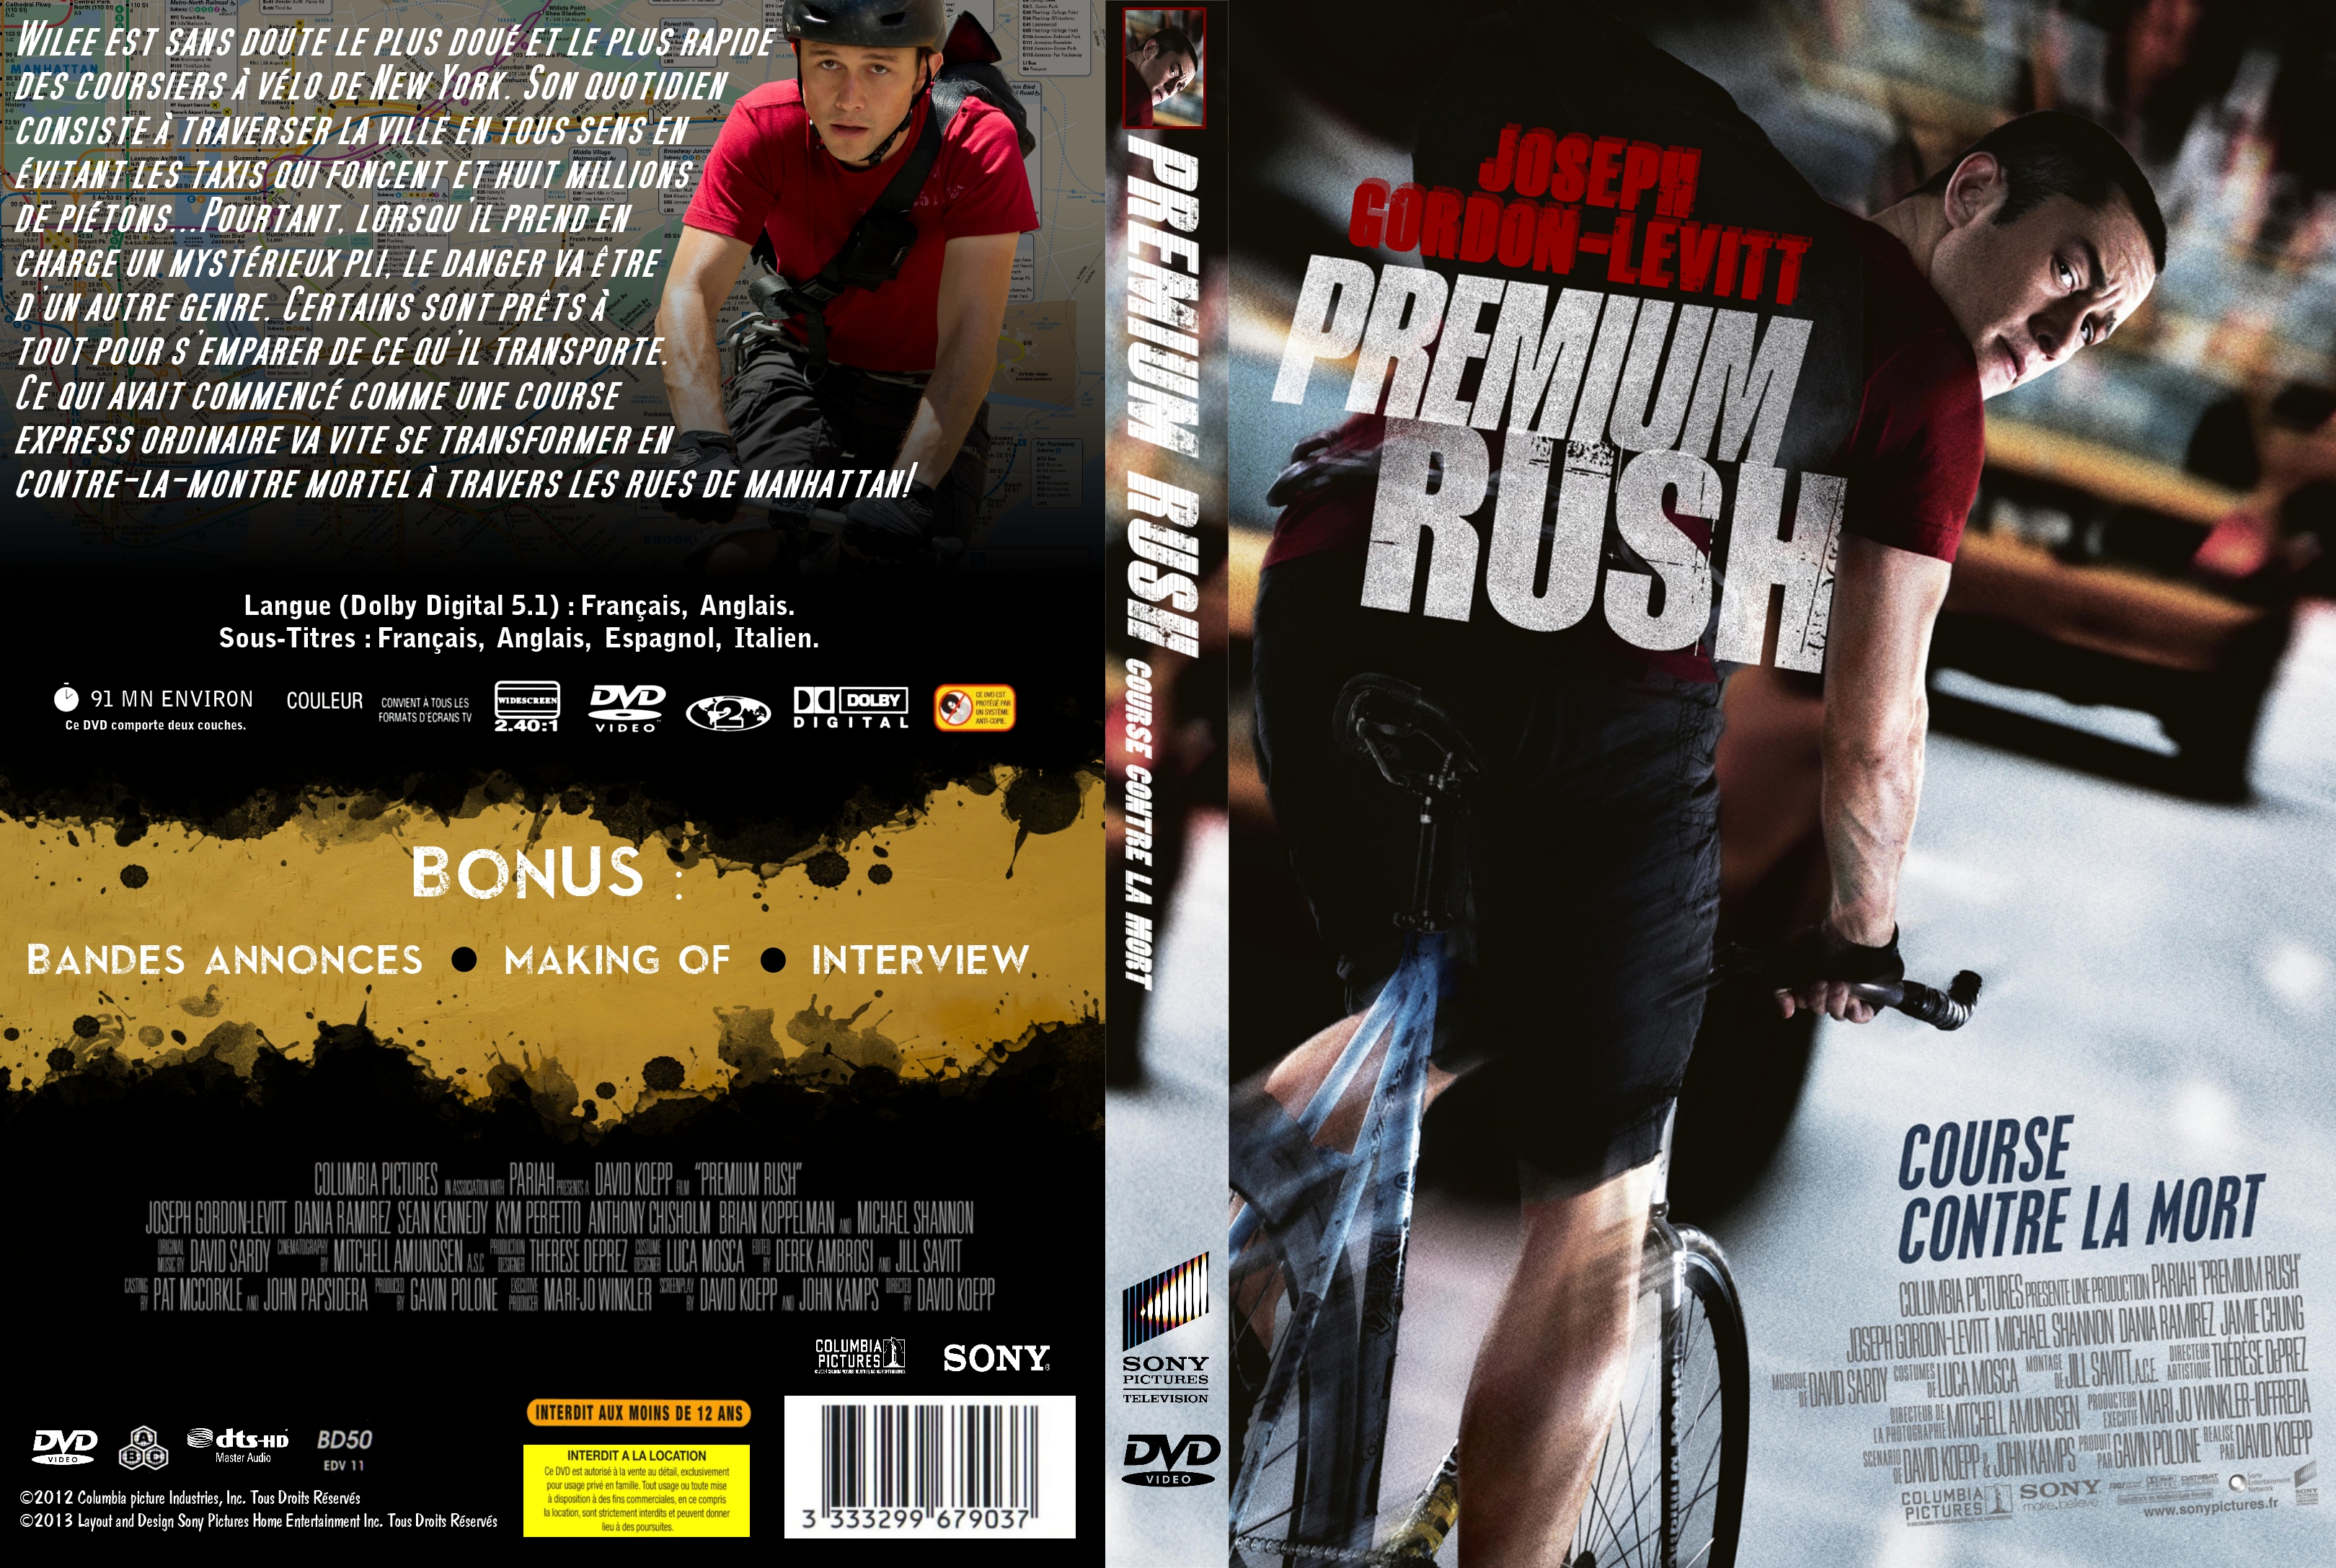 Jaquette DVD Premium Rush - Course contre la mort custom